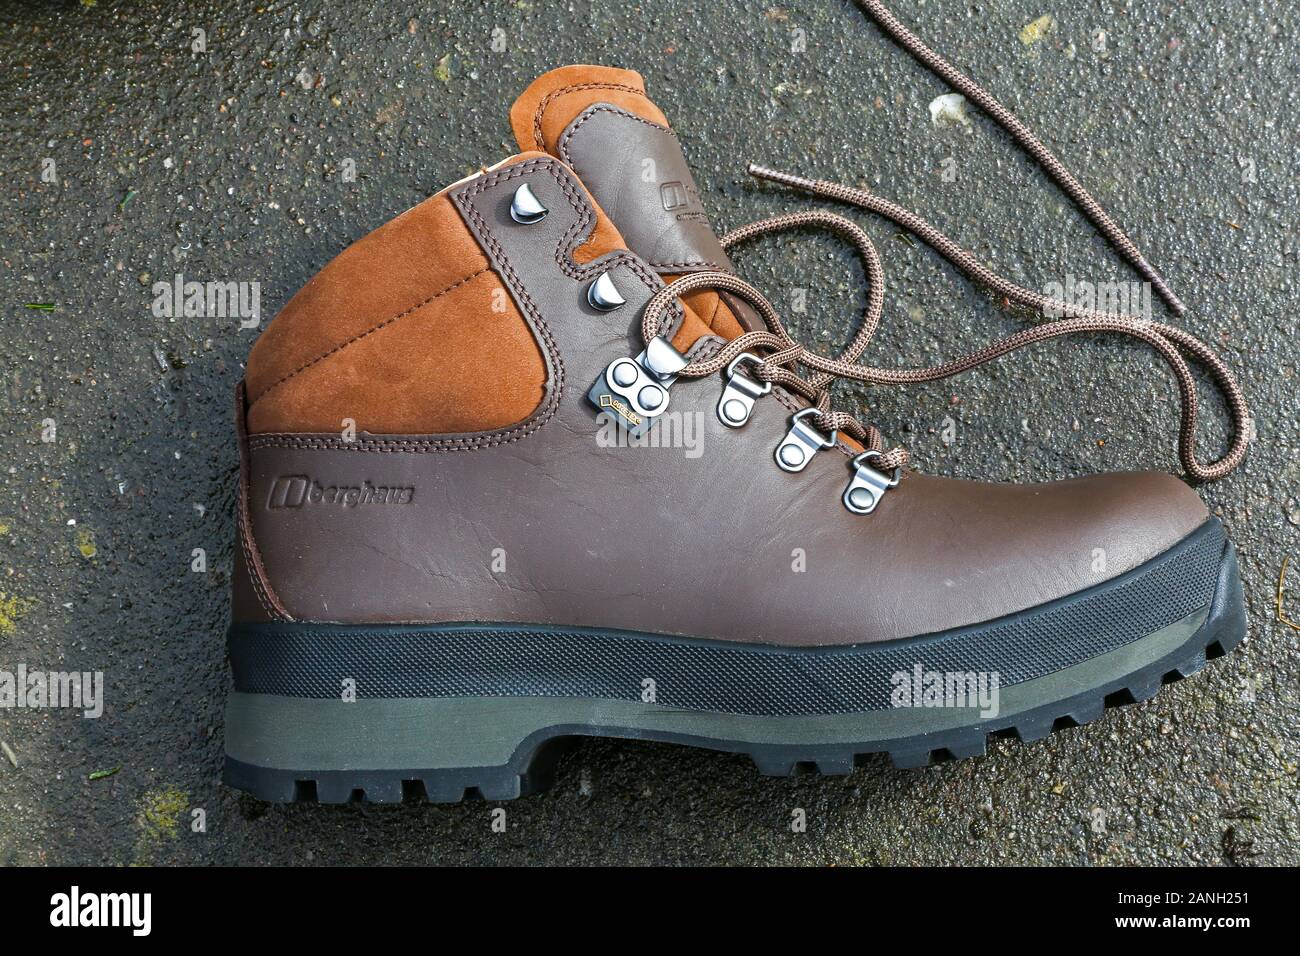 Brasher Berghaus Hillmaster II GTX Mens Goretex Waterproof Walking Boots Size UK 